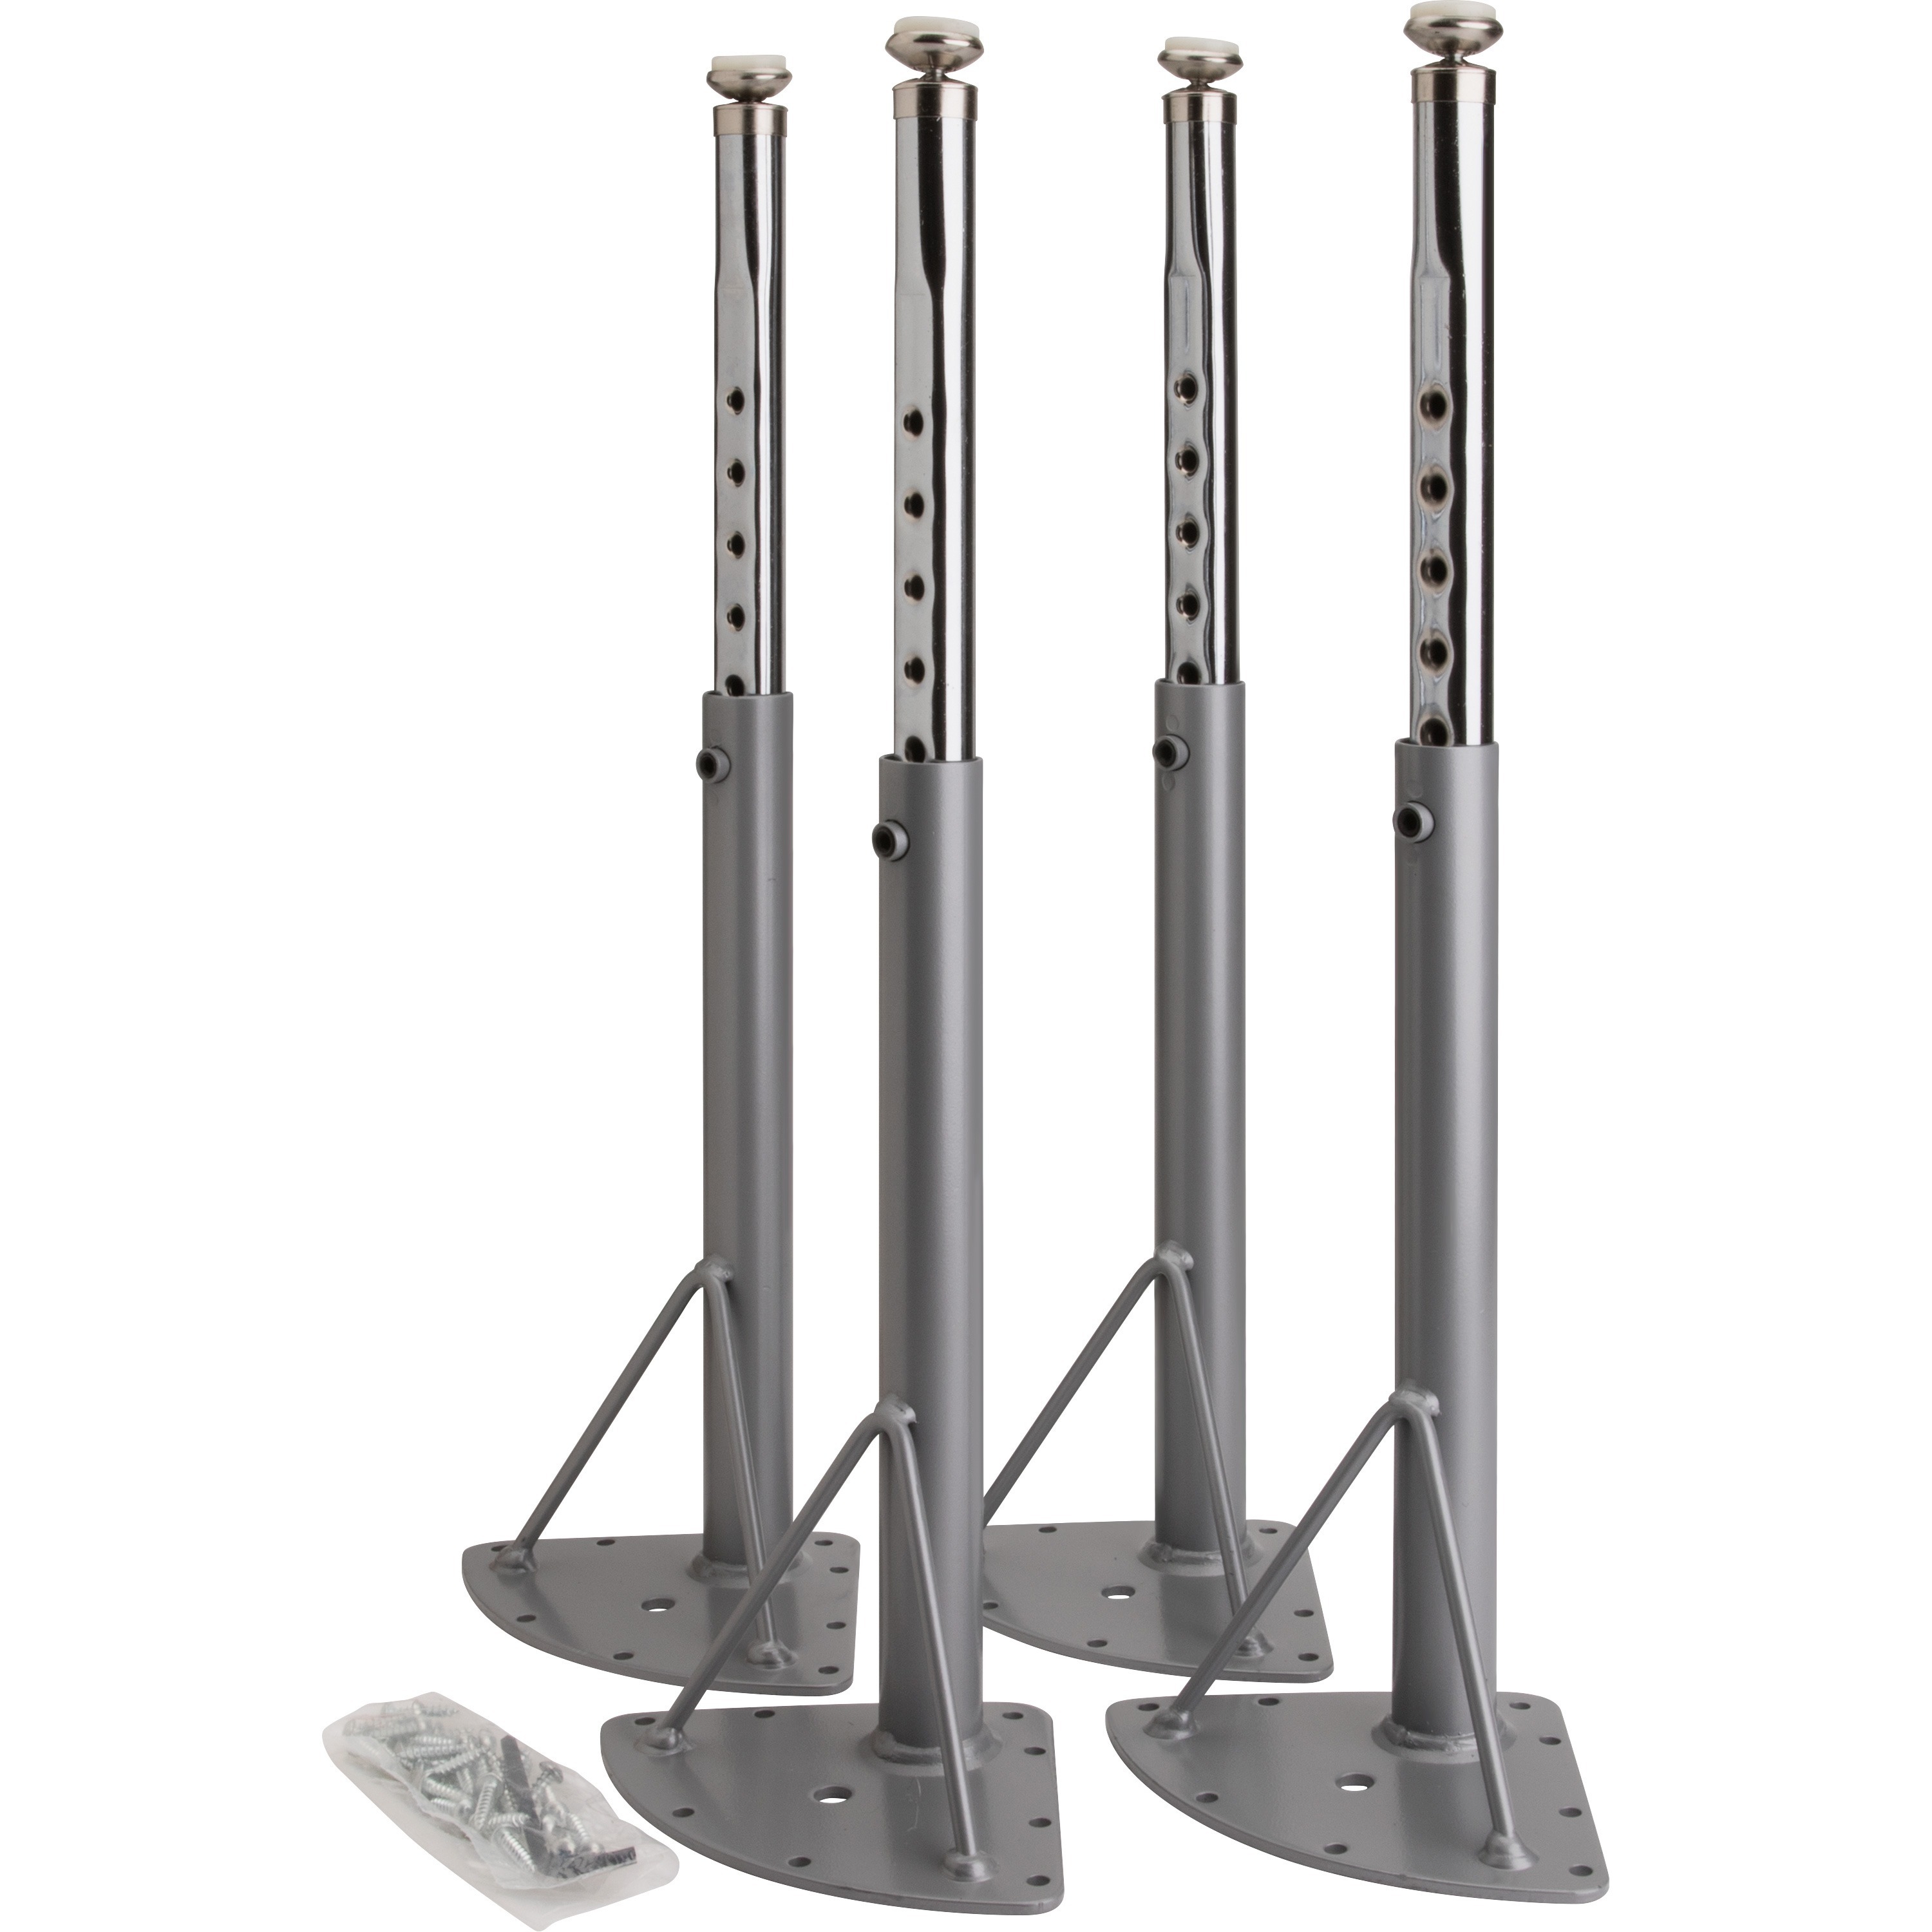 Adjustable Height Table Legs Wholesale Cheapest, Save 43% | jlcatj.gob.mx